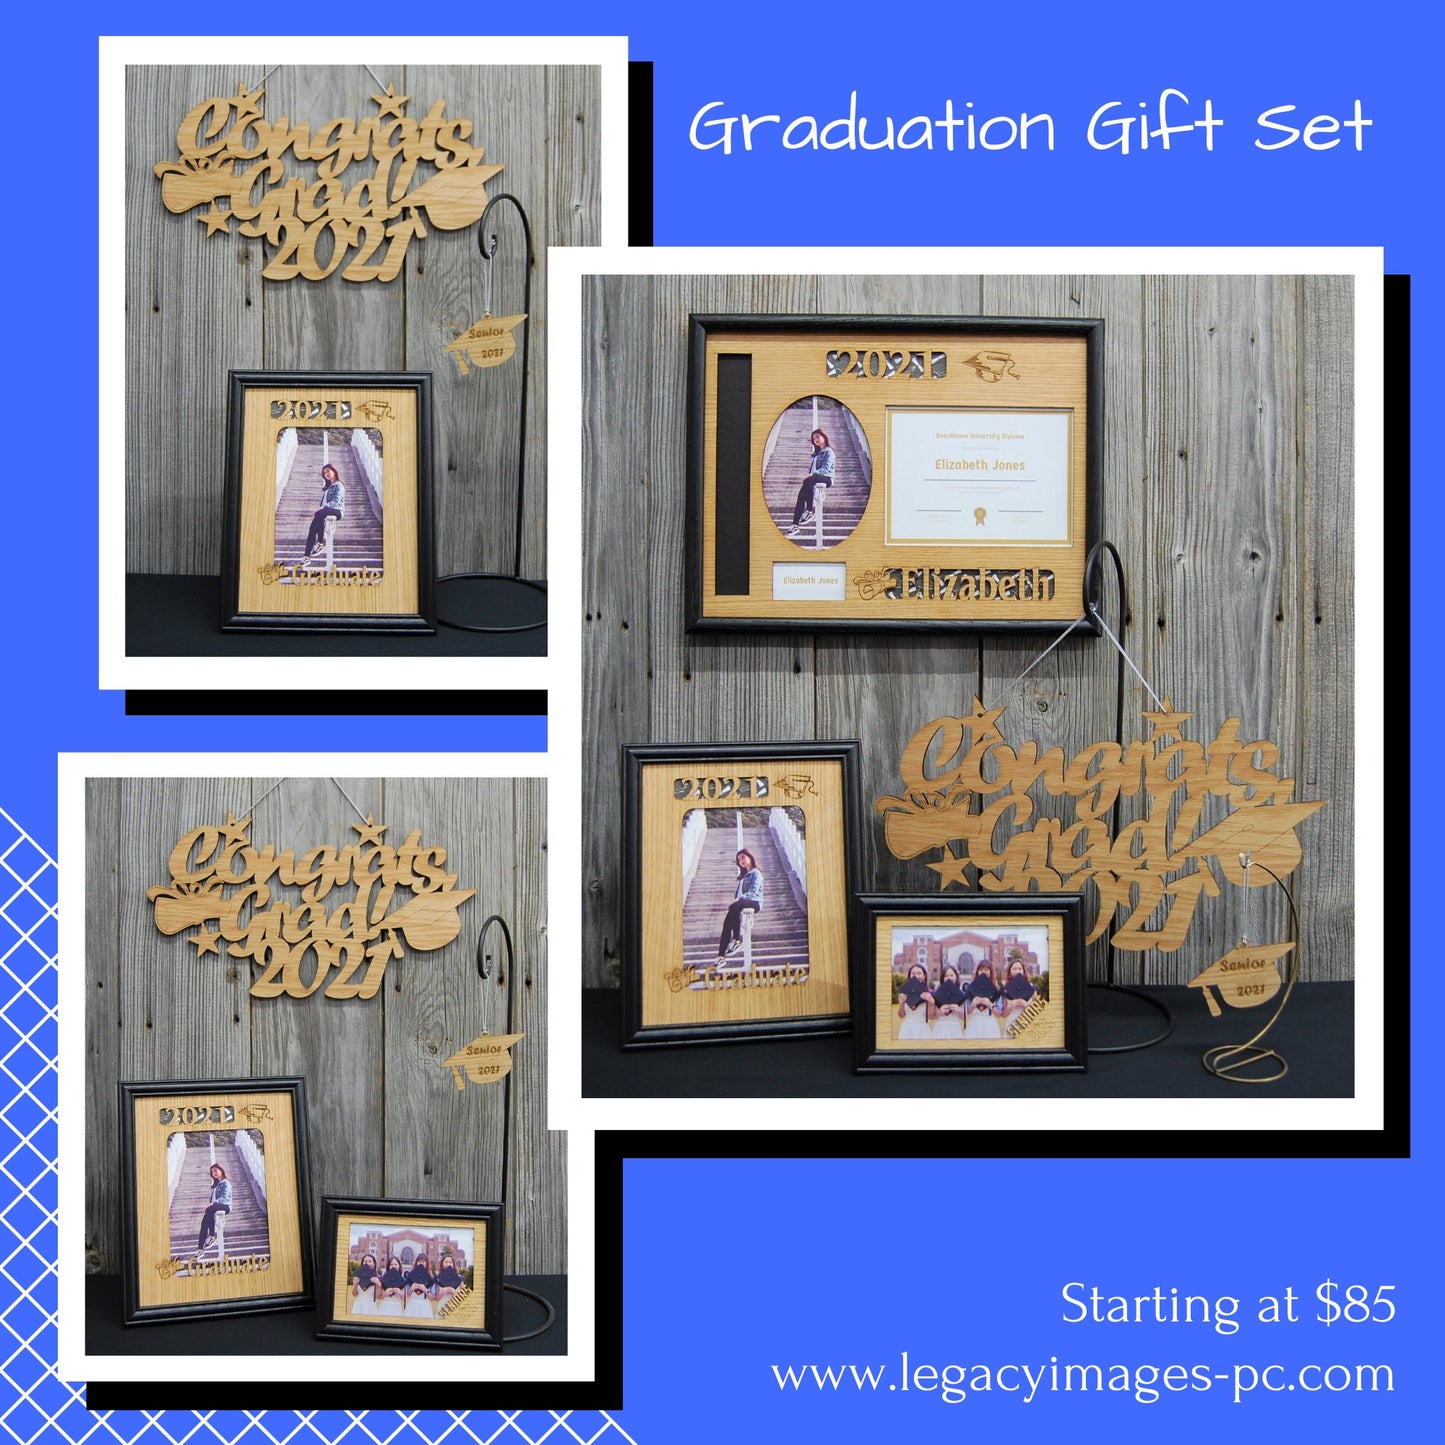 Graduation Gift Set - Legacy Images - Picture Frames